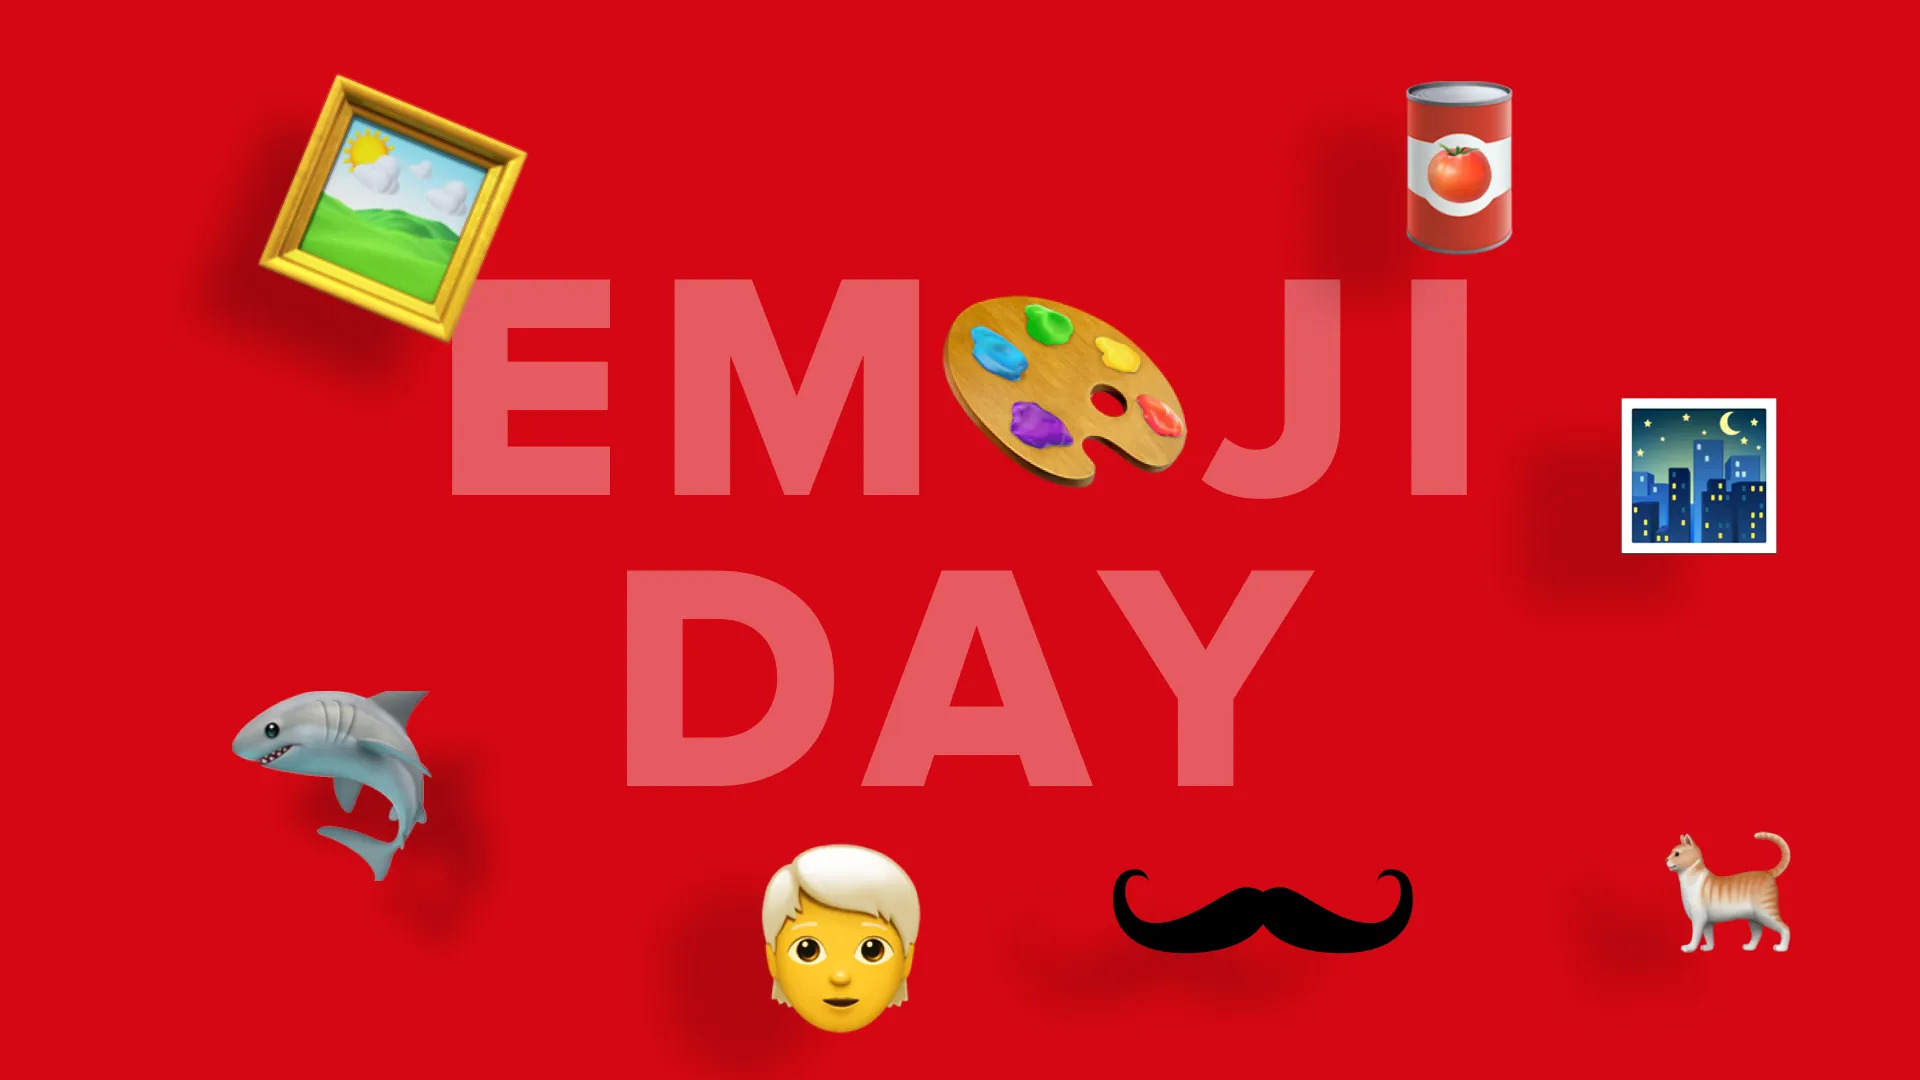 Reimagining Famous Artworks to Celebrate World Emoji Day